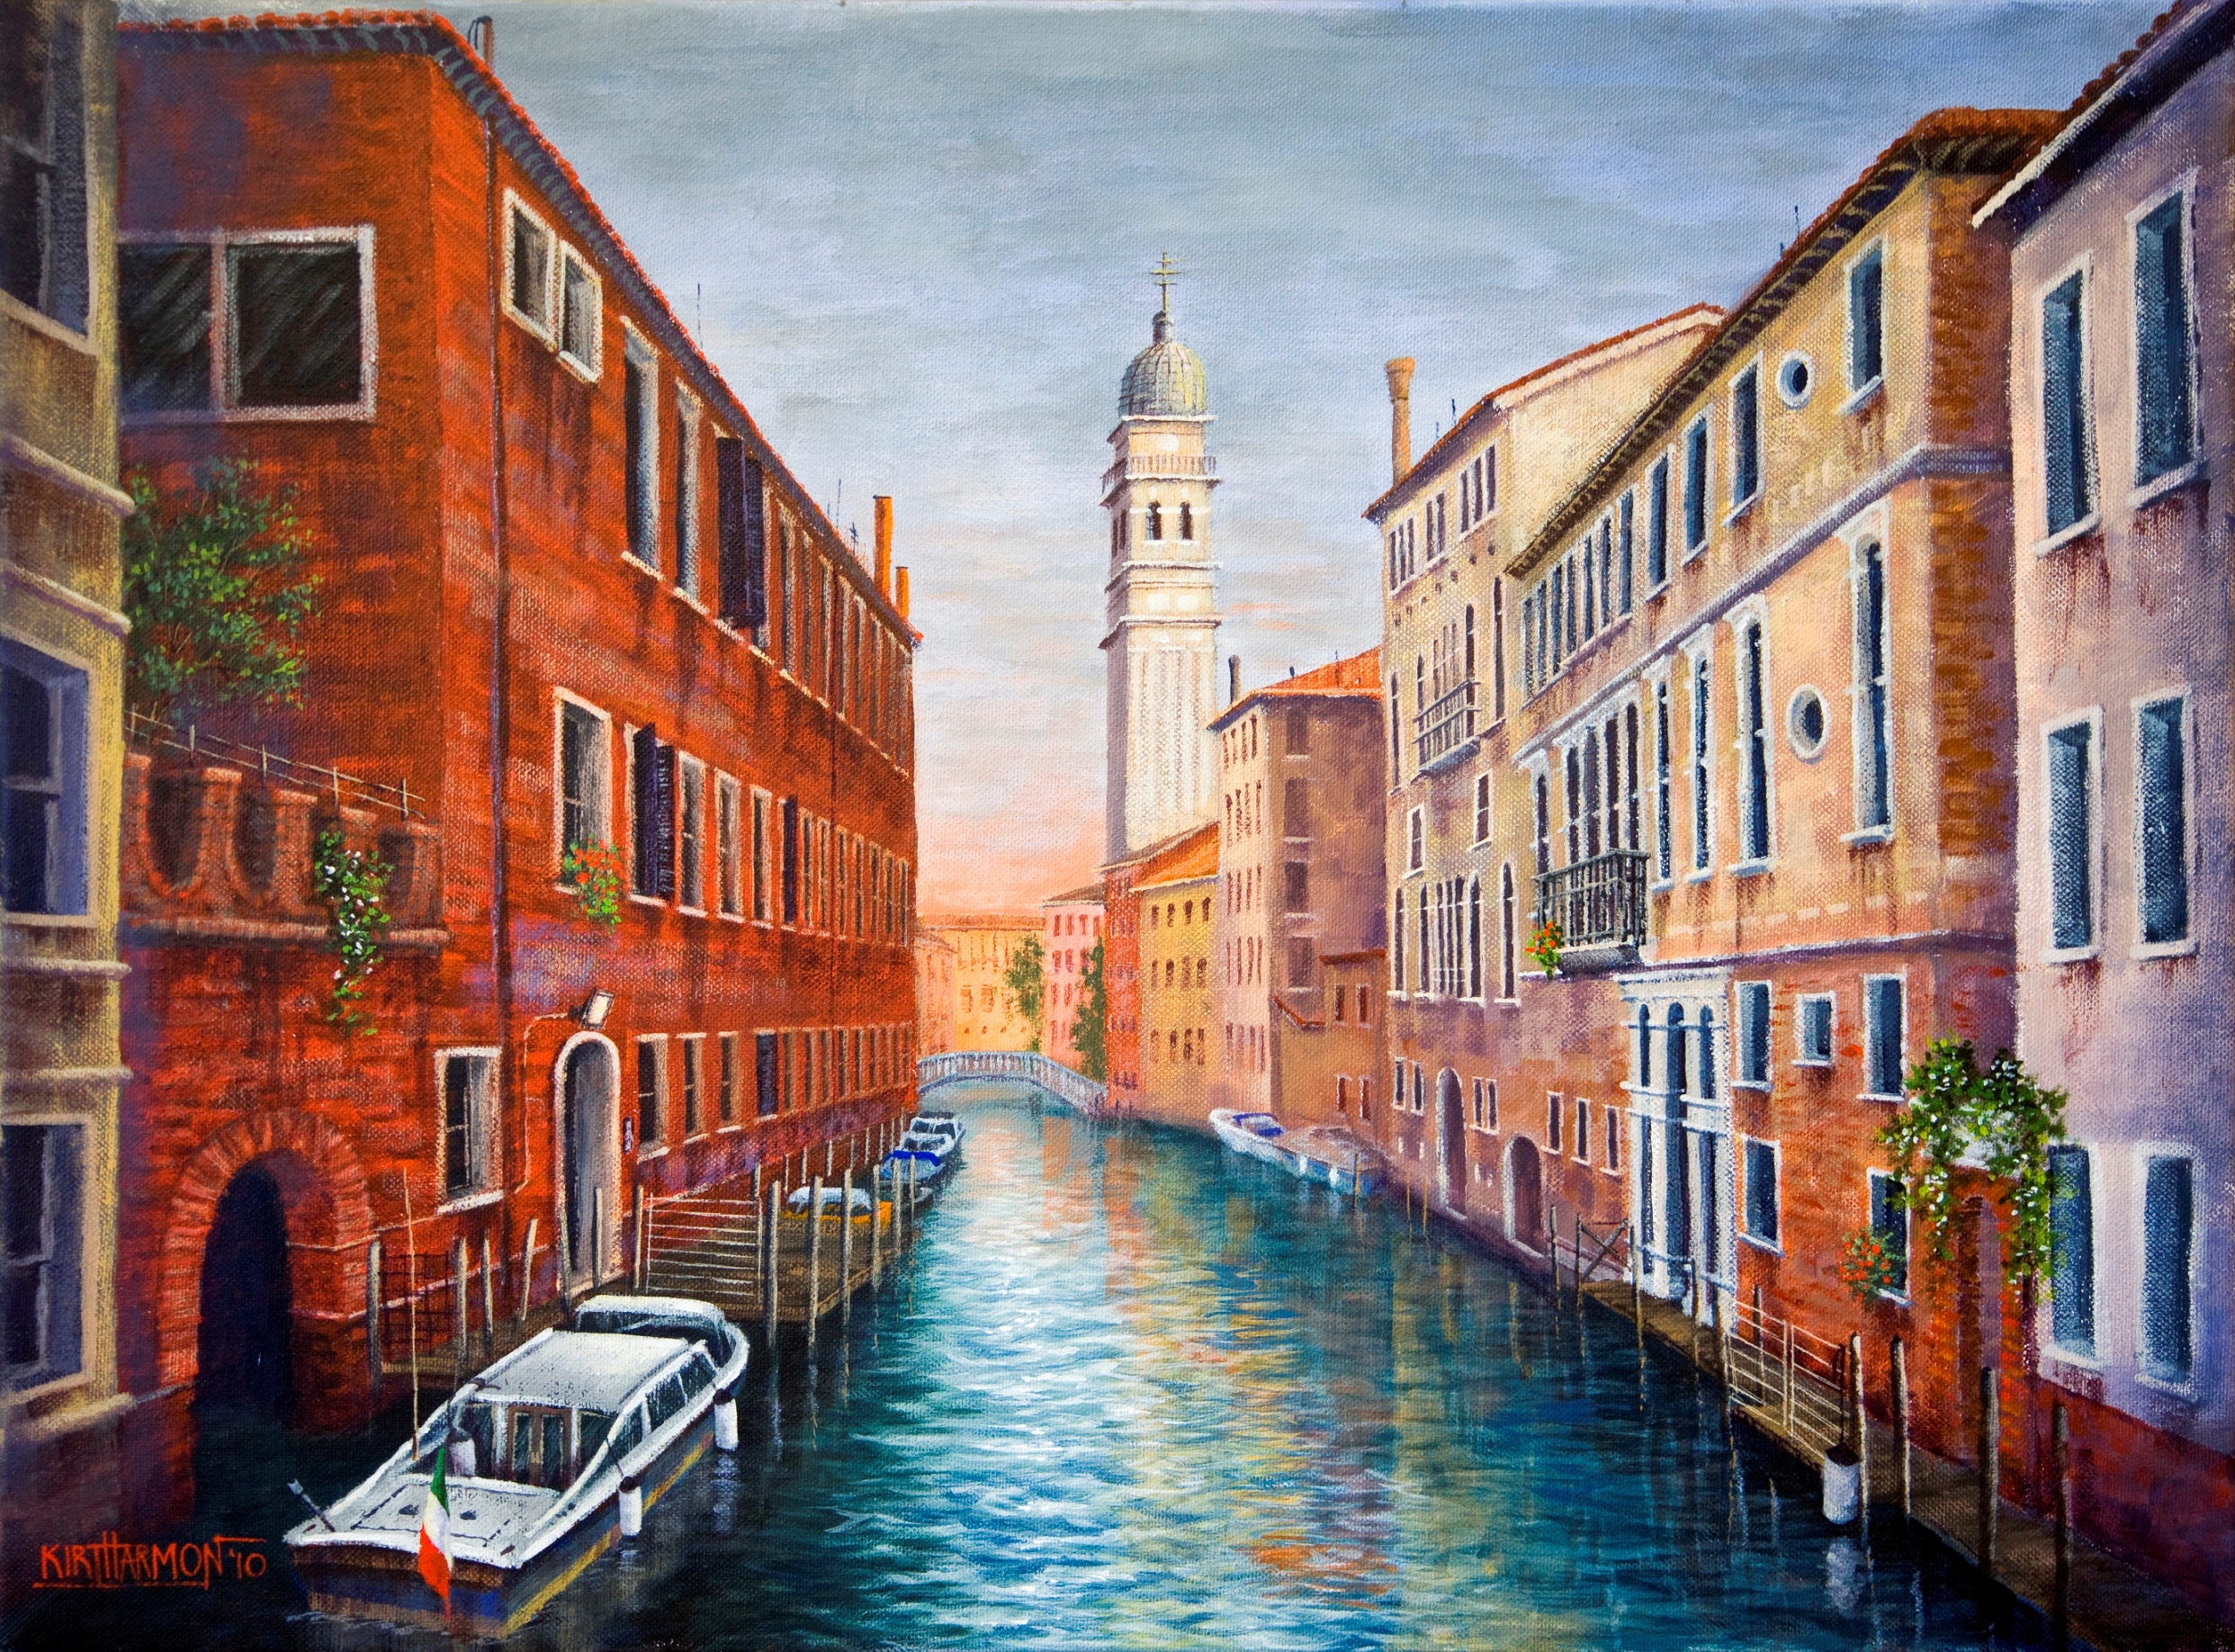 Craig's Venice